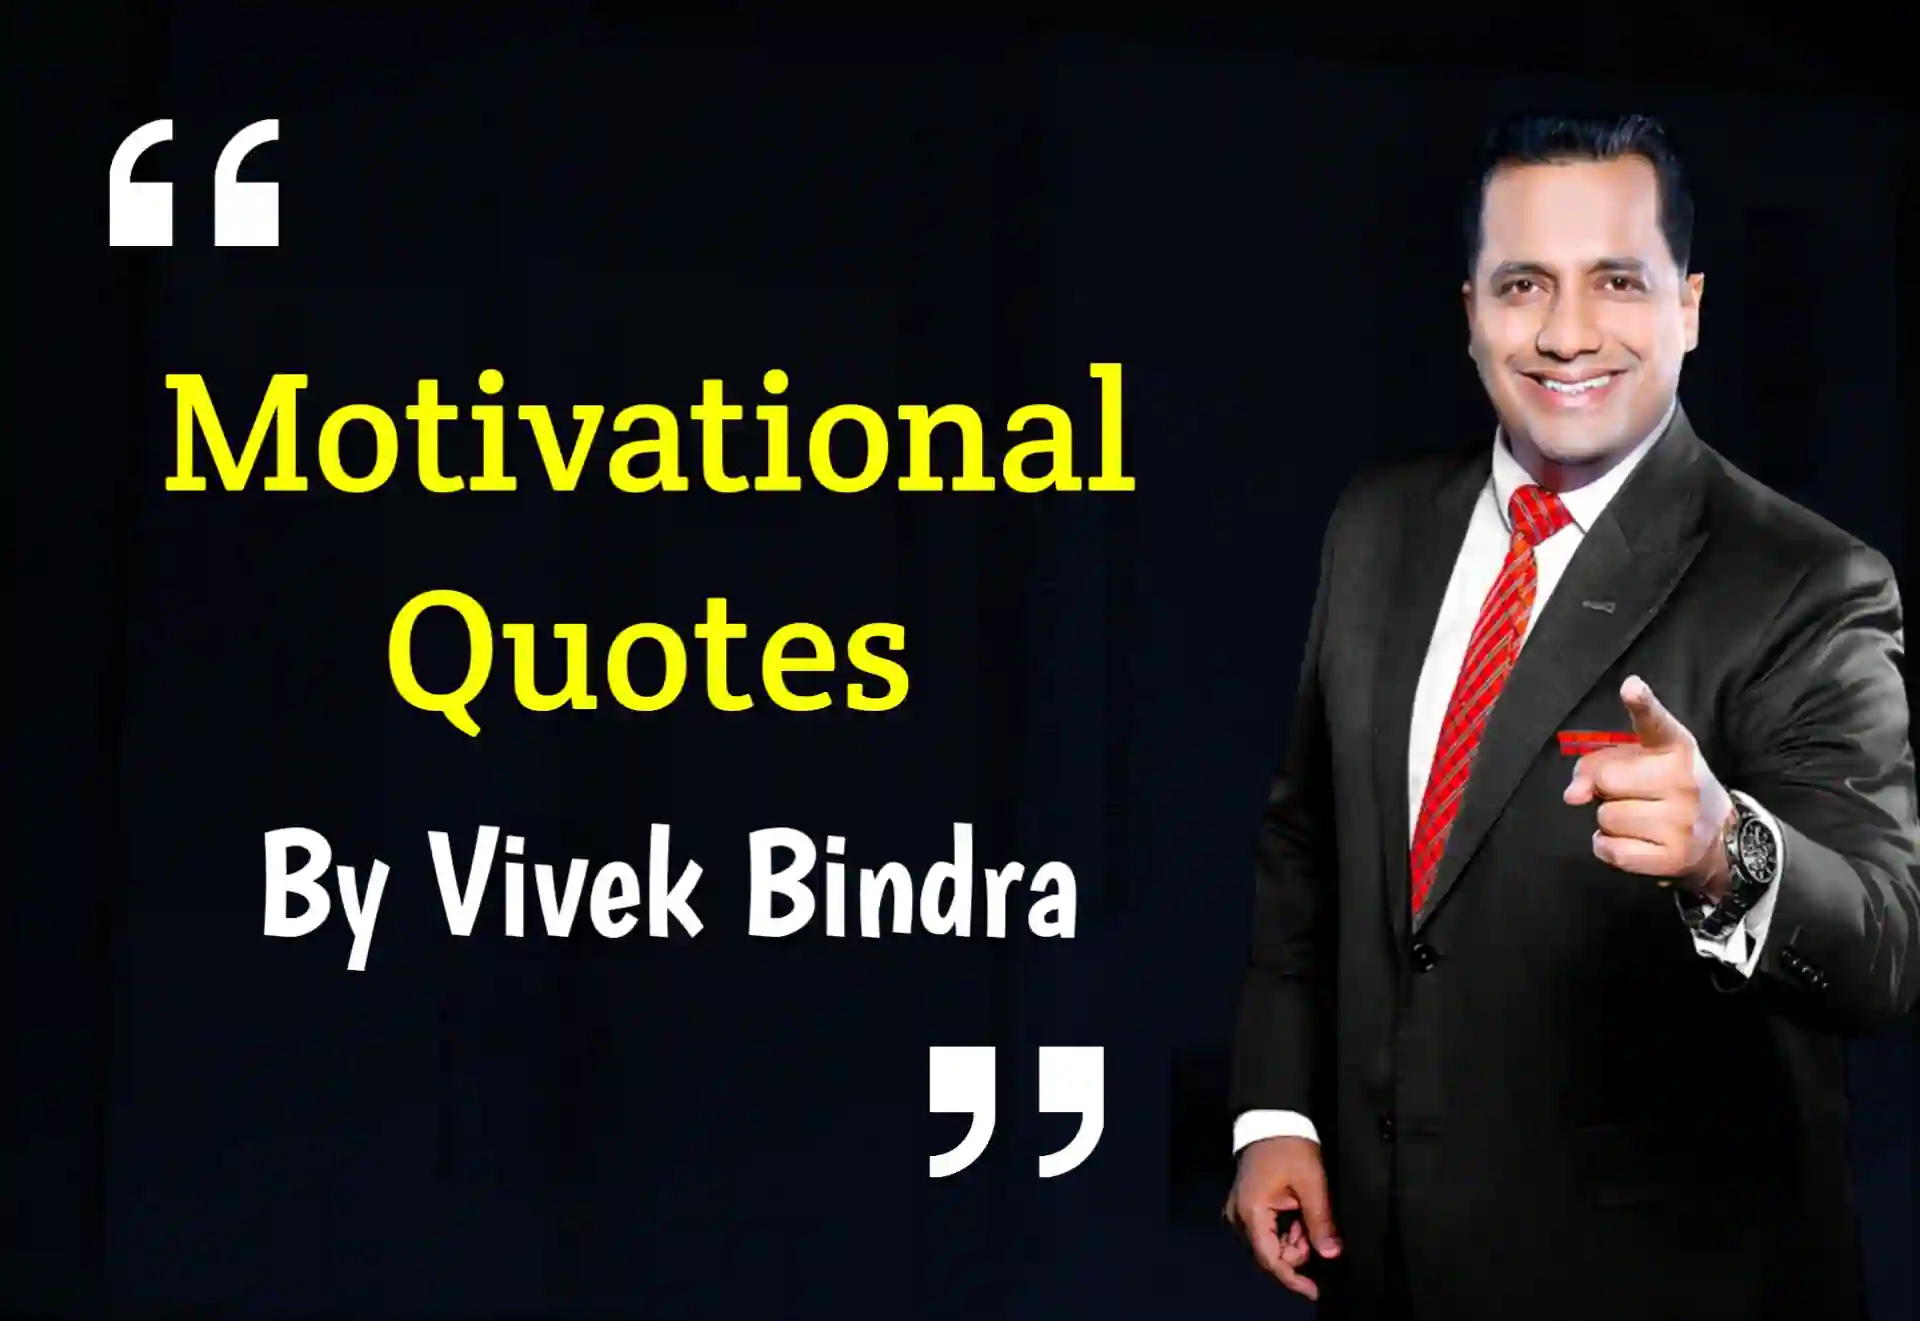 Vivek Bindra Motivational Quotes